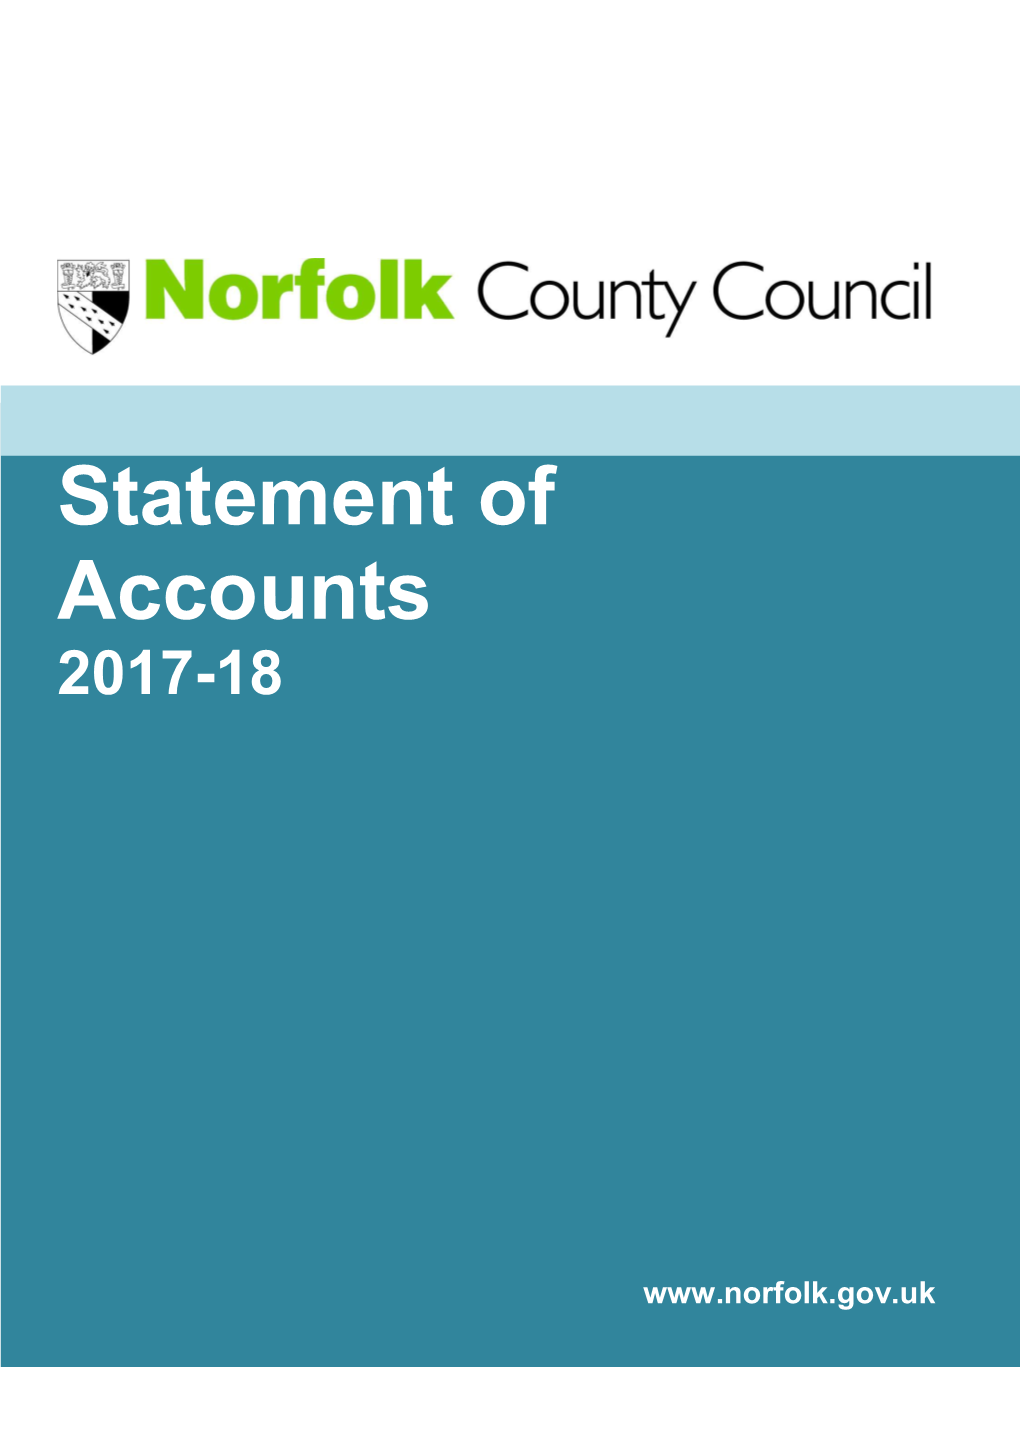 Statement of Accounts 2017-18